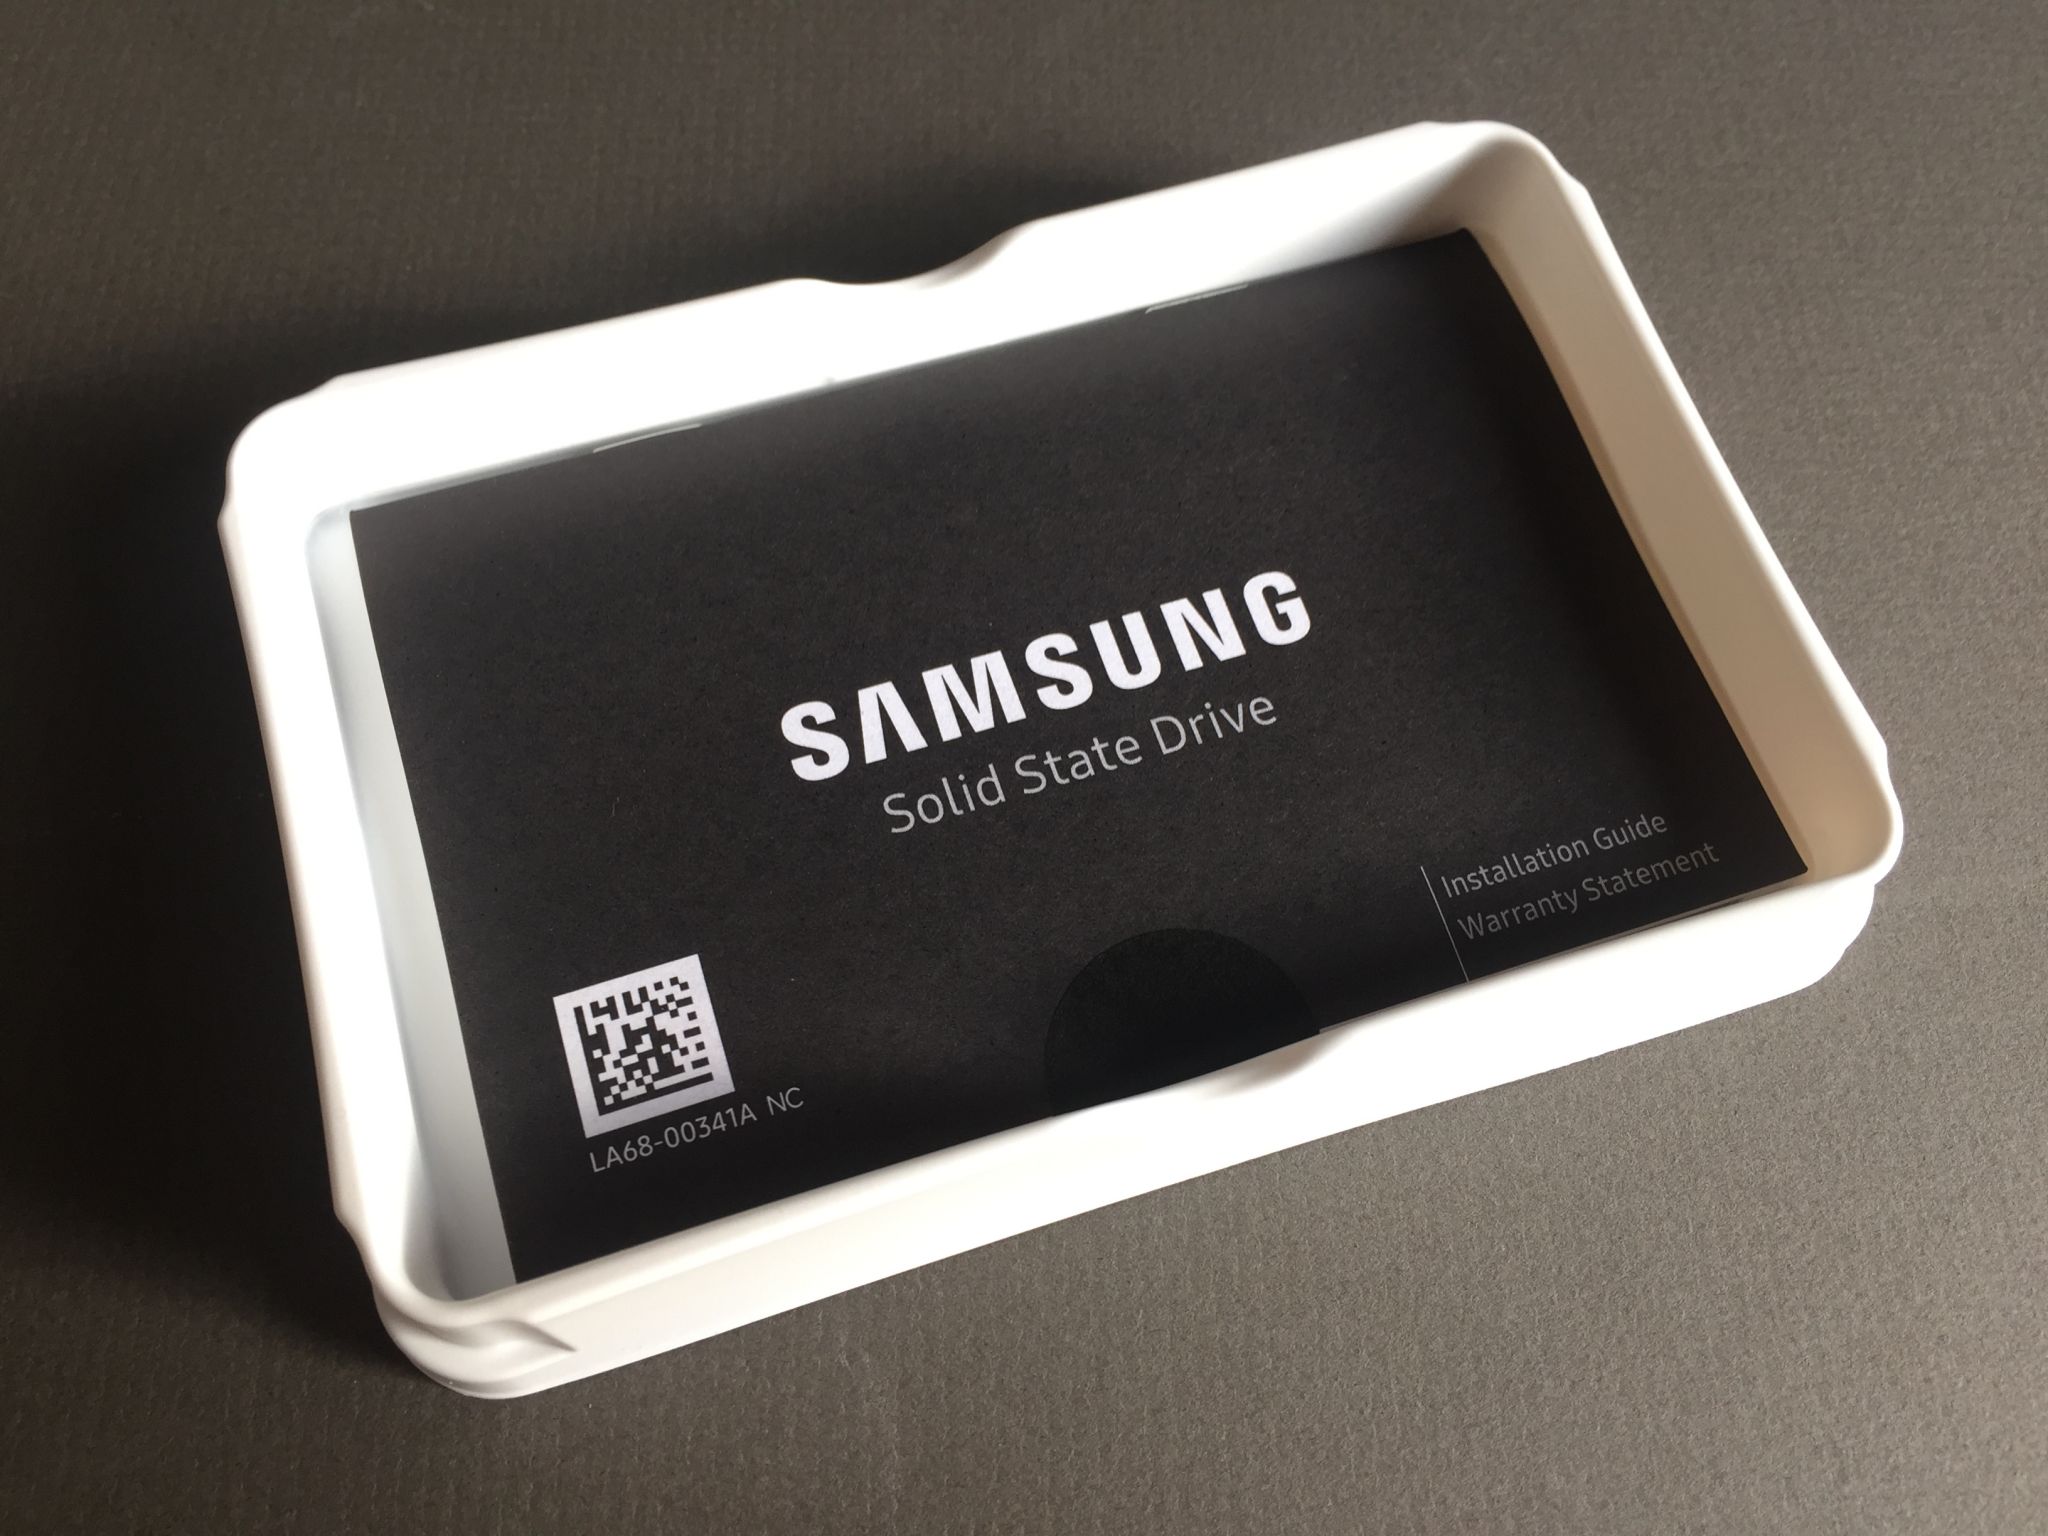 Samsung 980 500gb. Samsung 980 Pro. Samsung SSD 980 500gb. Samsung SSD 980 Pro 500gb MZ v8p500bw. Samsung 980 Pro 2tb.